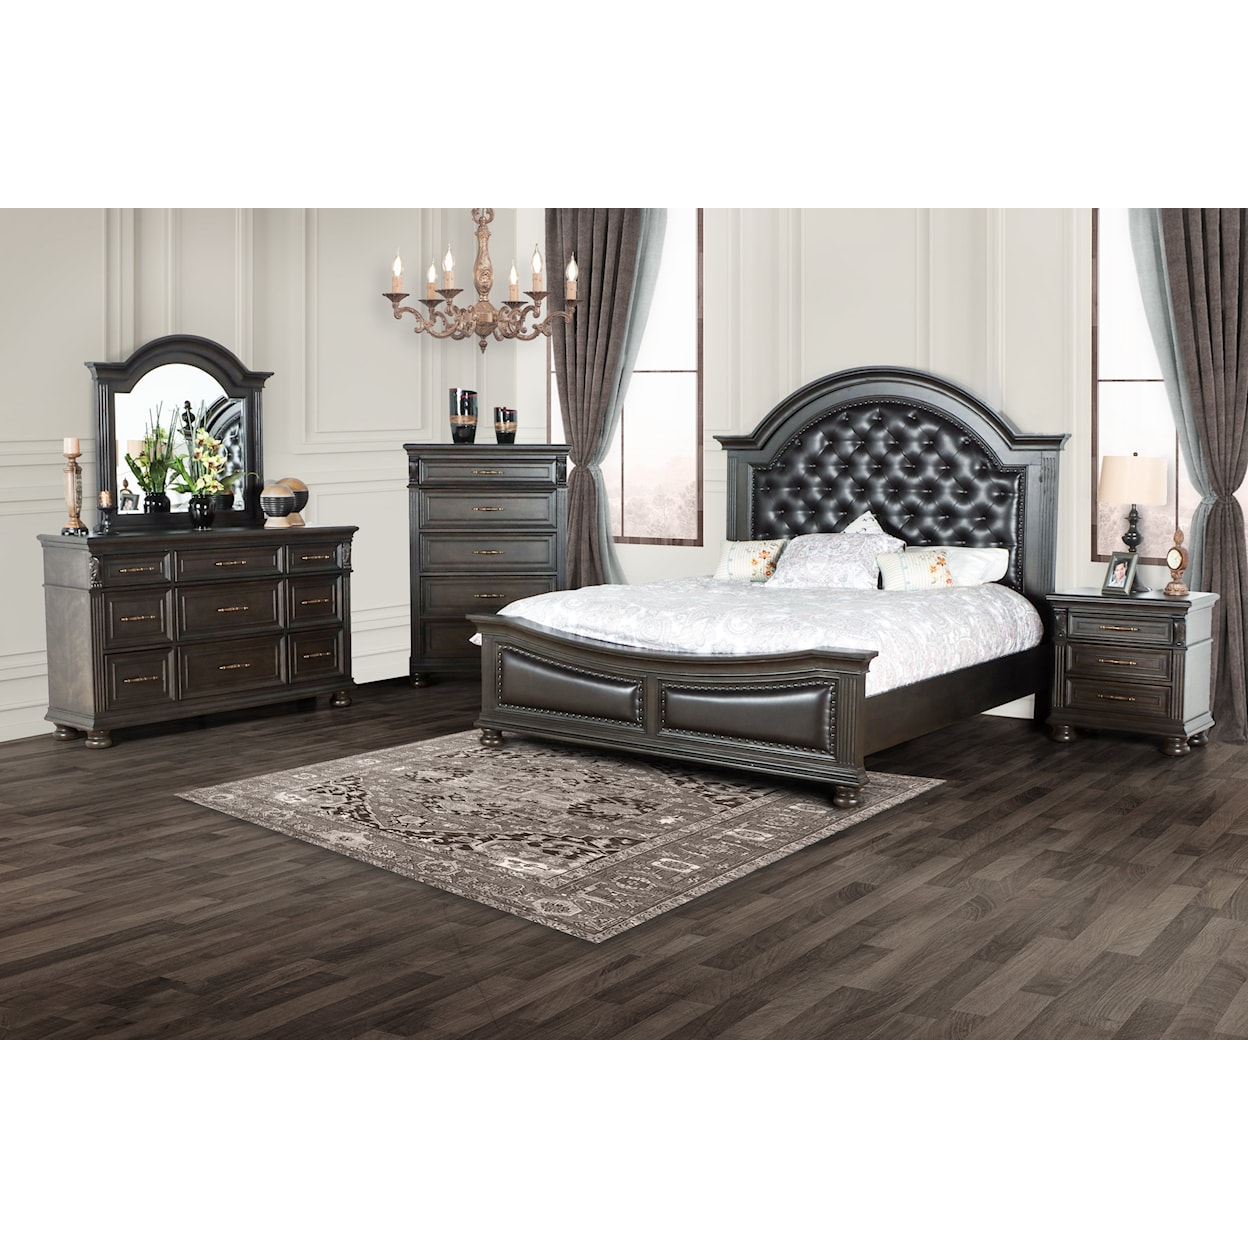 New Classic Furniture Balboa Cal King Bedroom Group